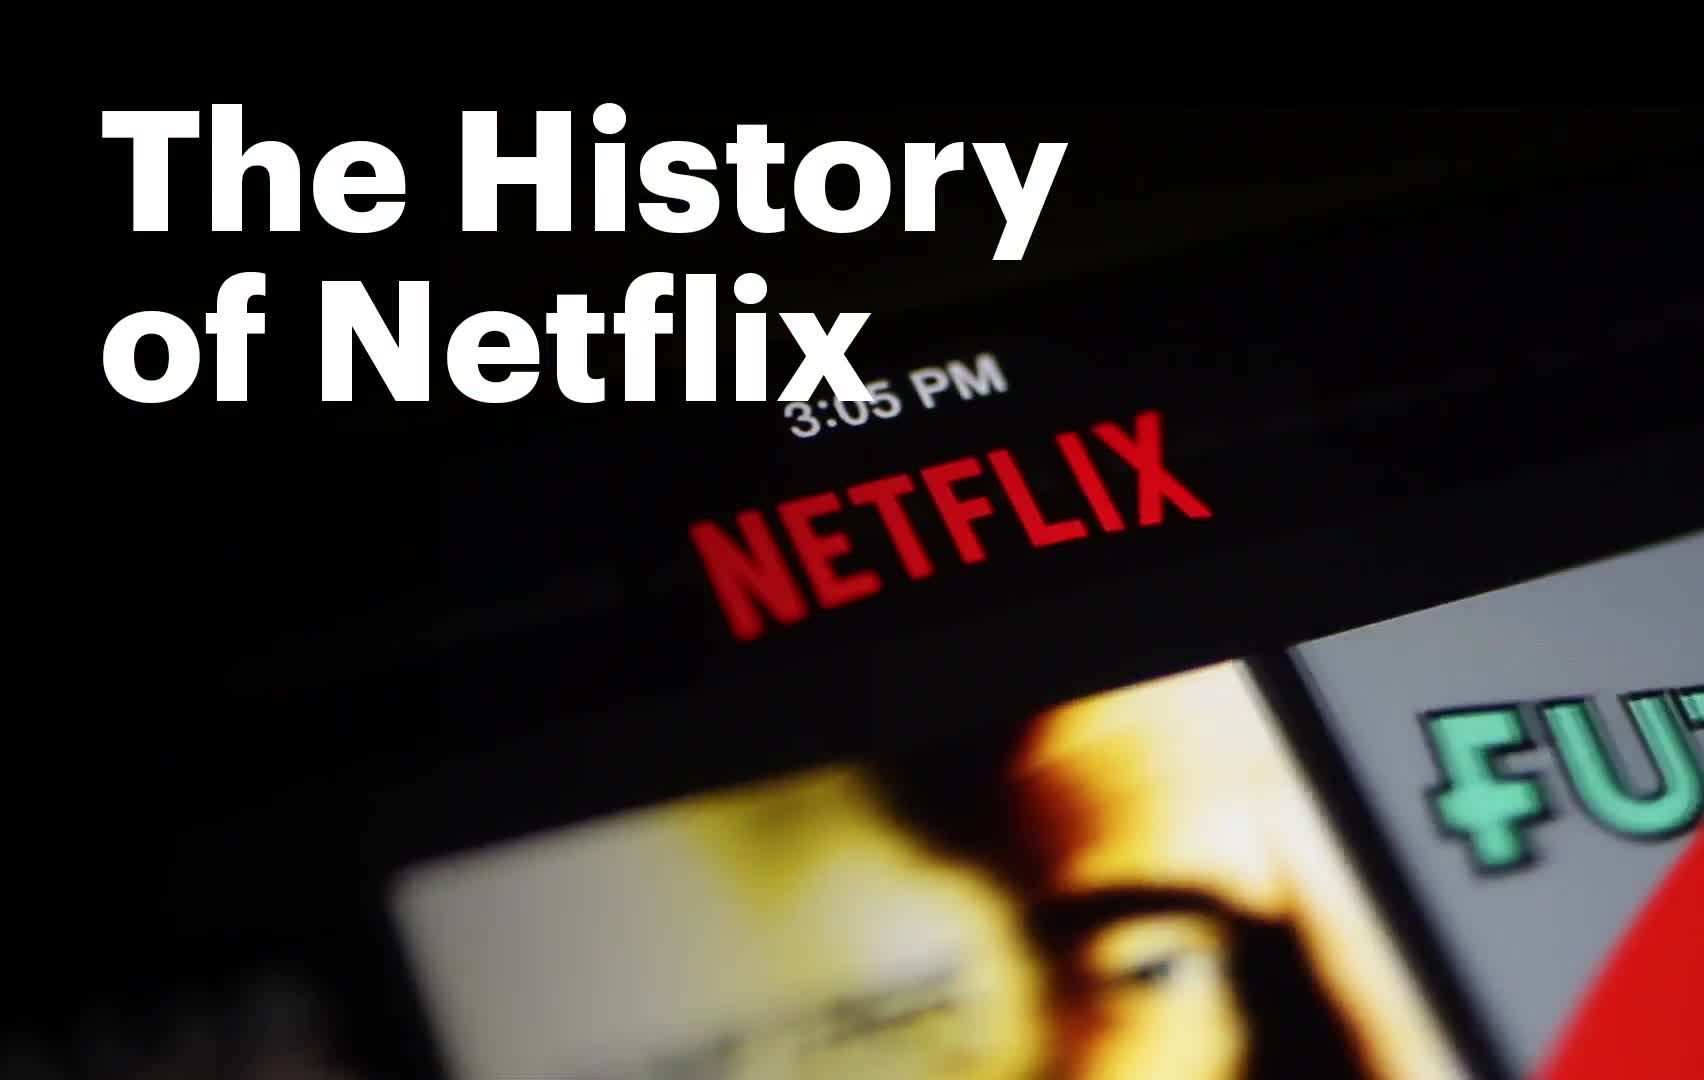 The History of Netflix- Founding, Model, Timeline, Milestones